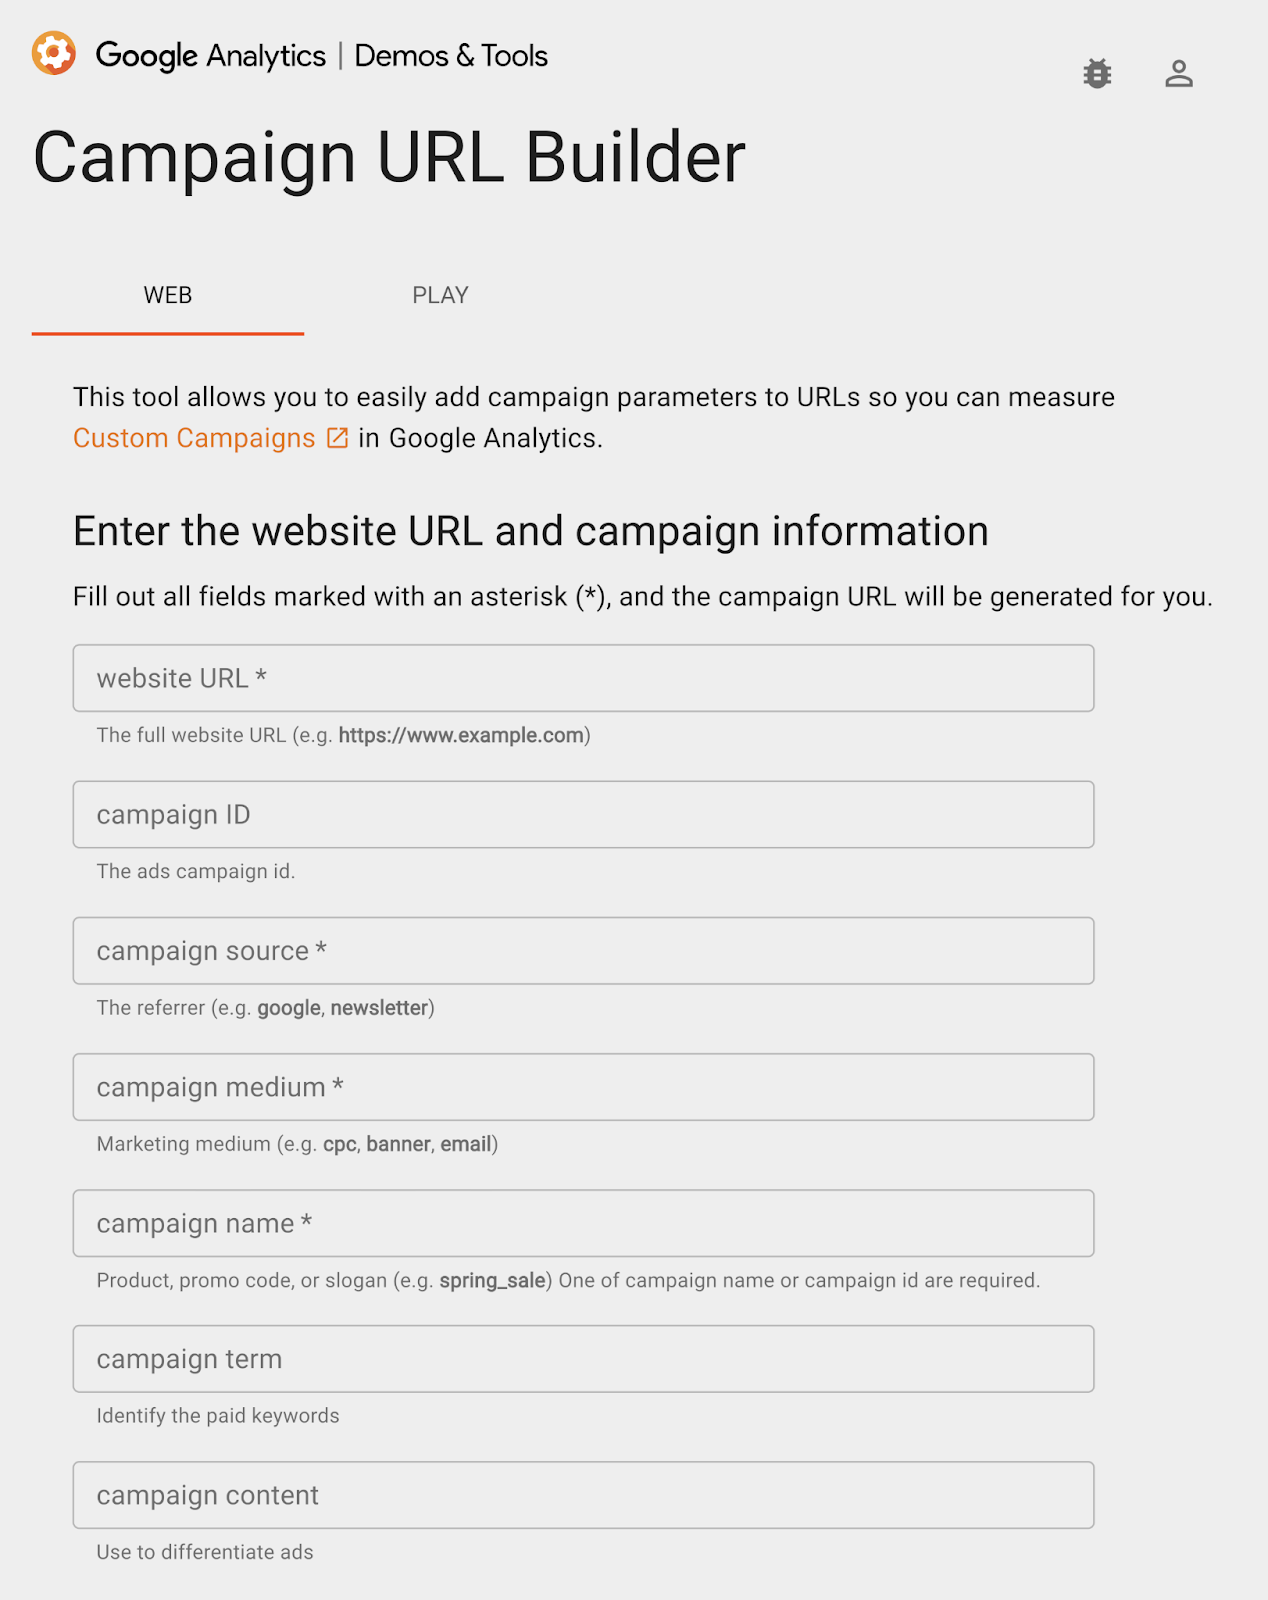 Campaign URL Builder form